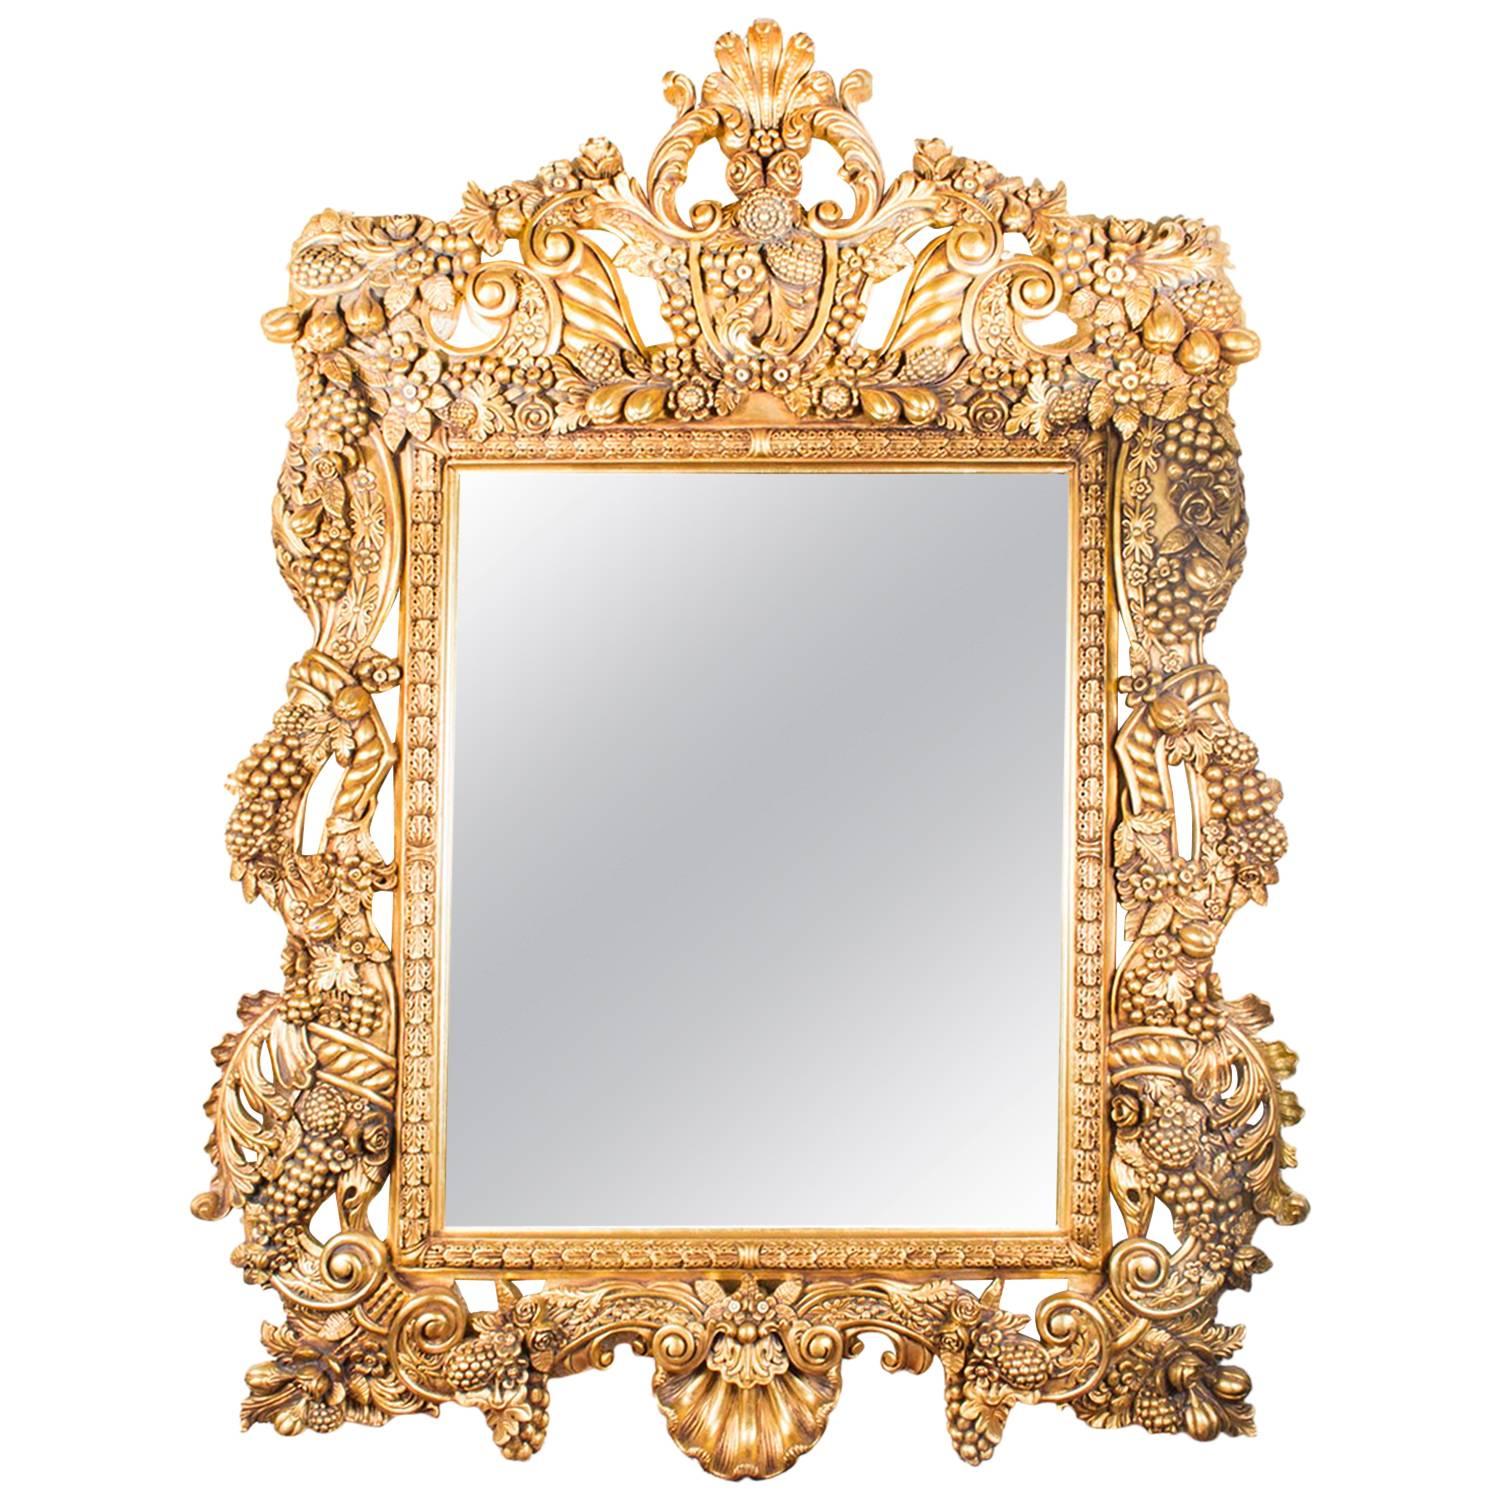 Decorative Ornate Florentine Giltwood Mirror 190 x 150 cm For Sale